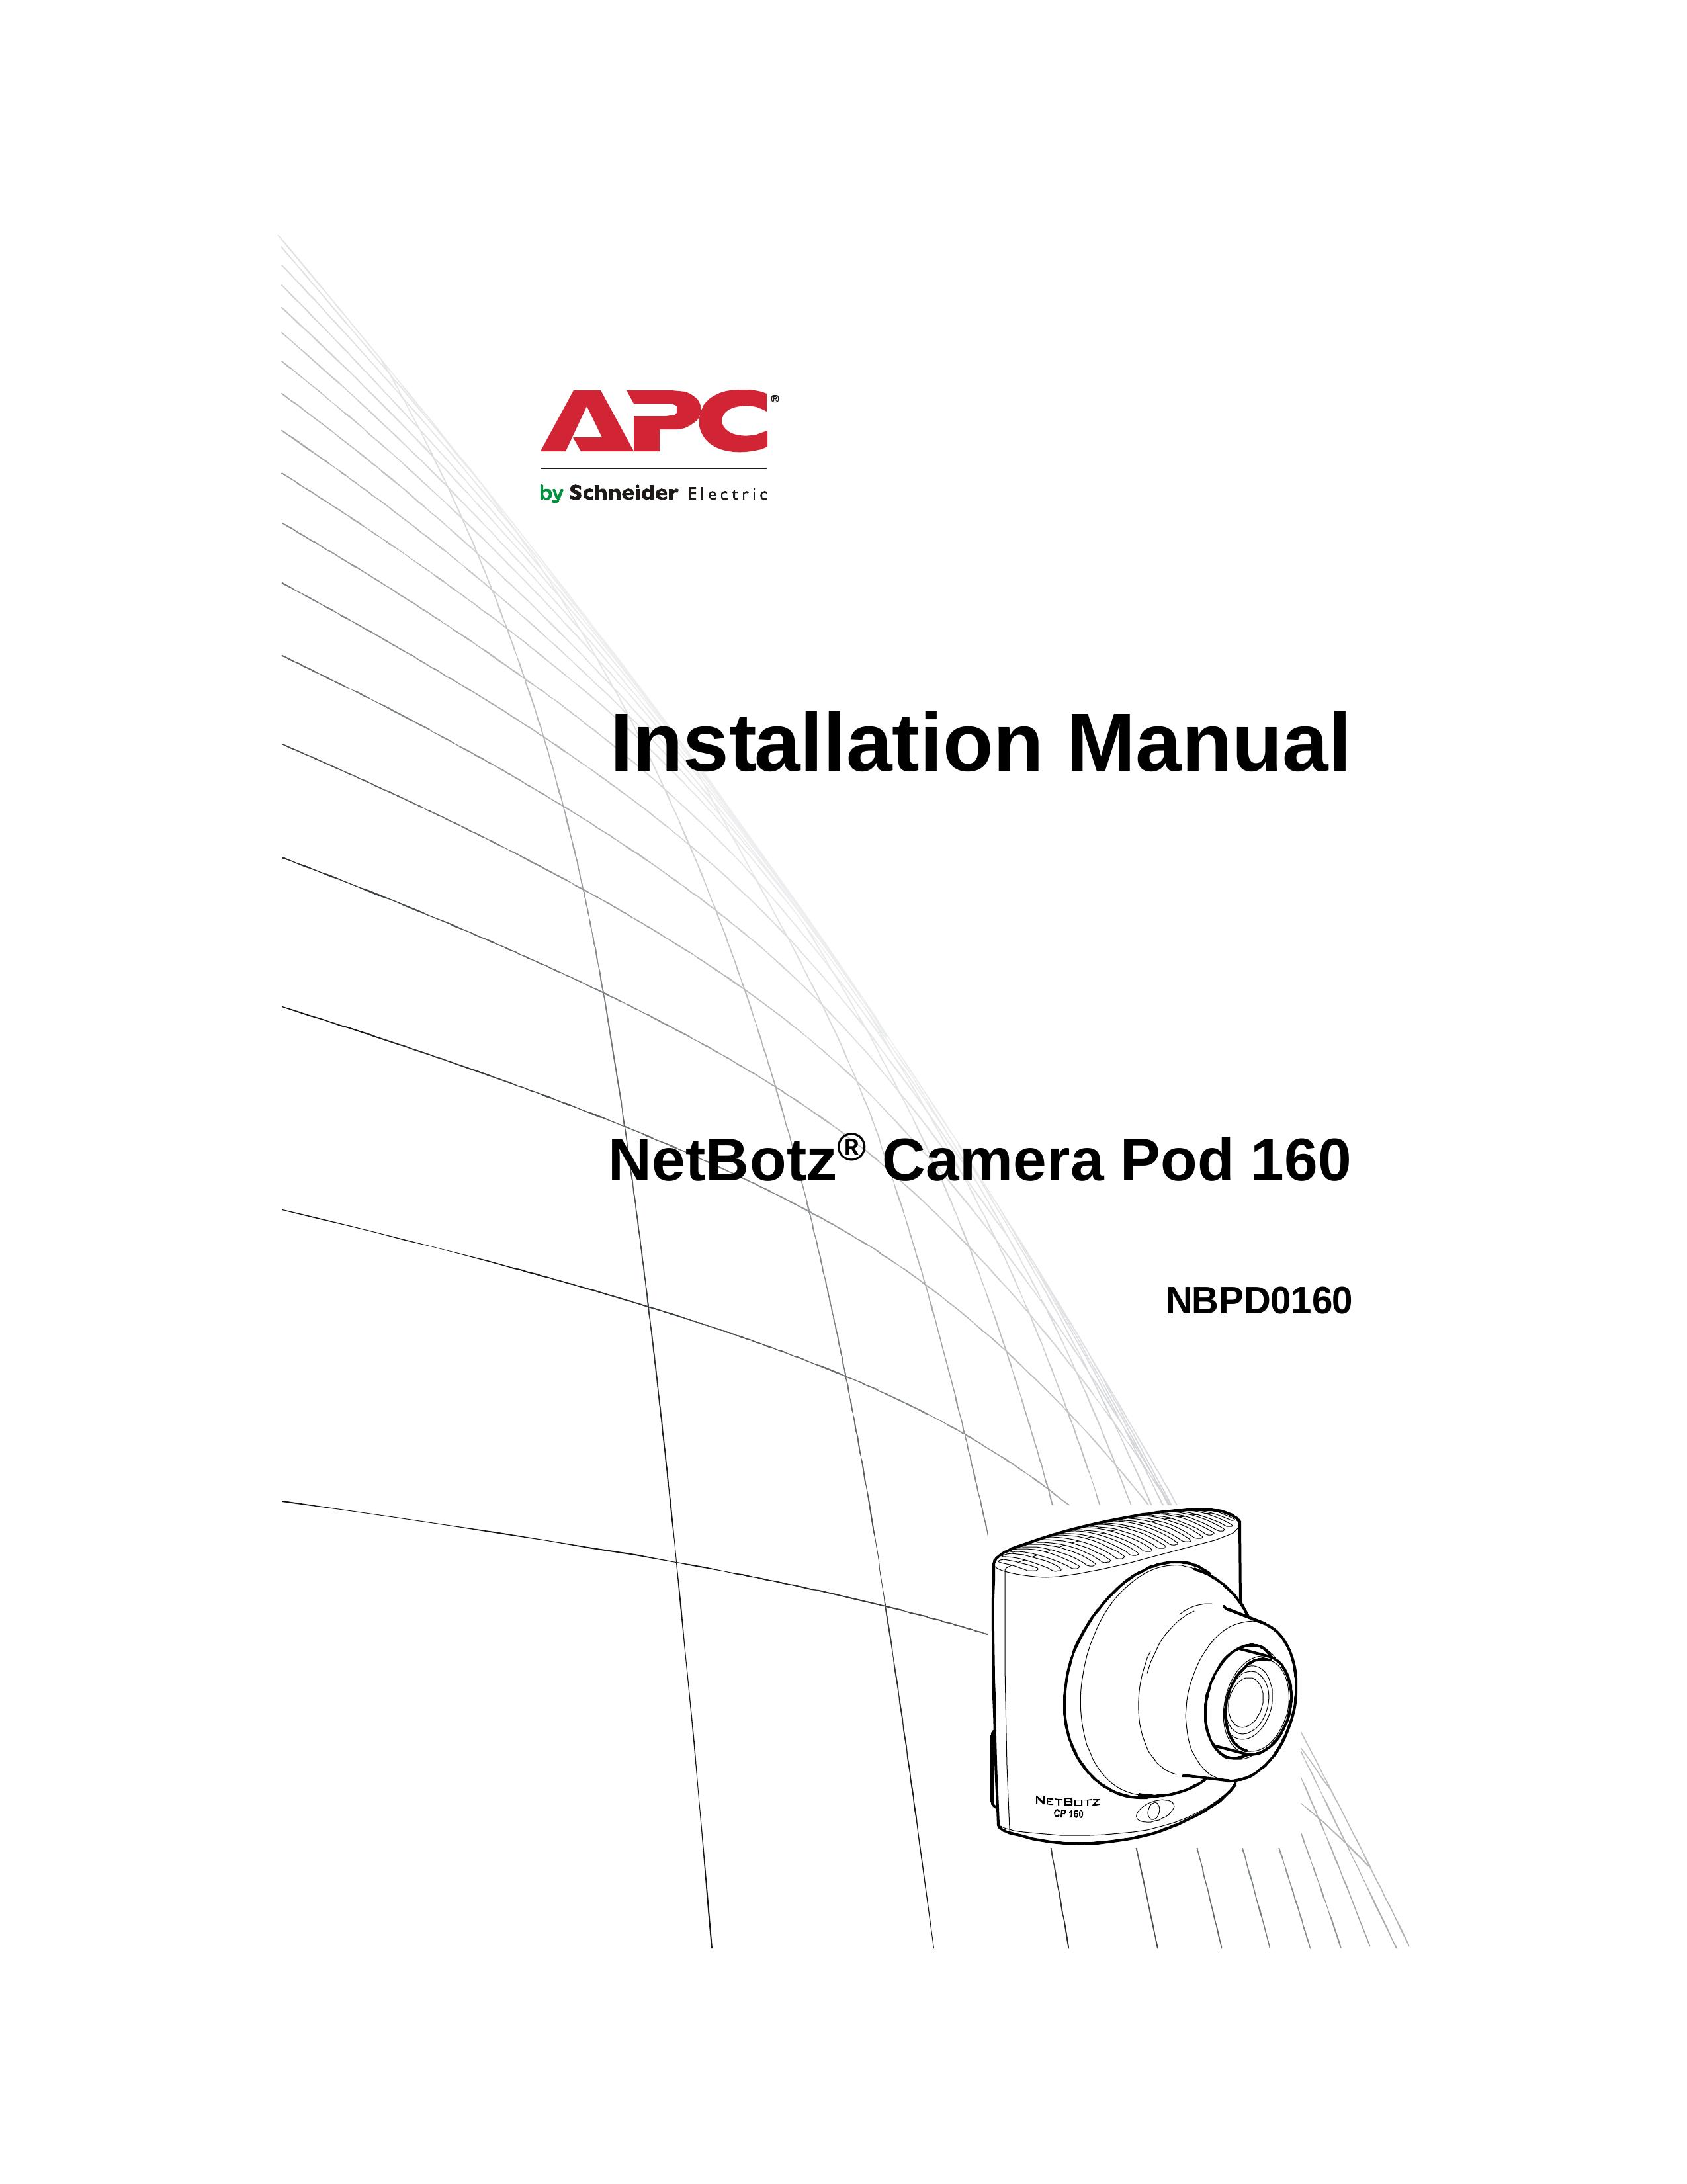 APC NBPD0160 Camera Accessories User Manual